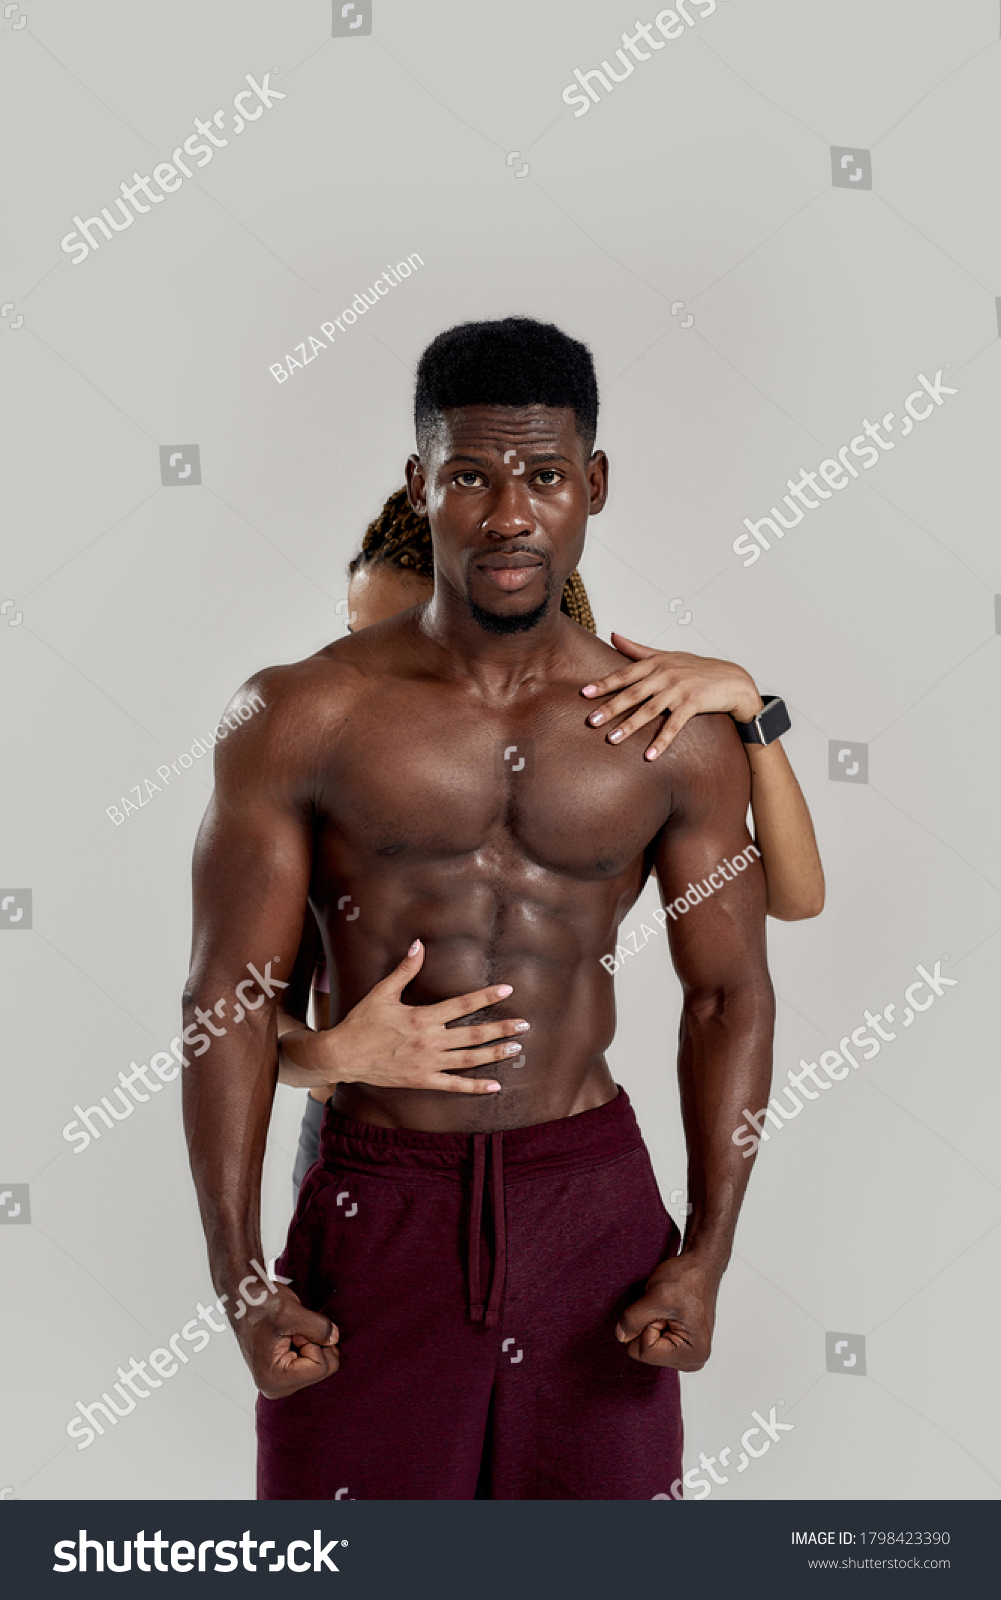 African american muscle vs caucasian